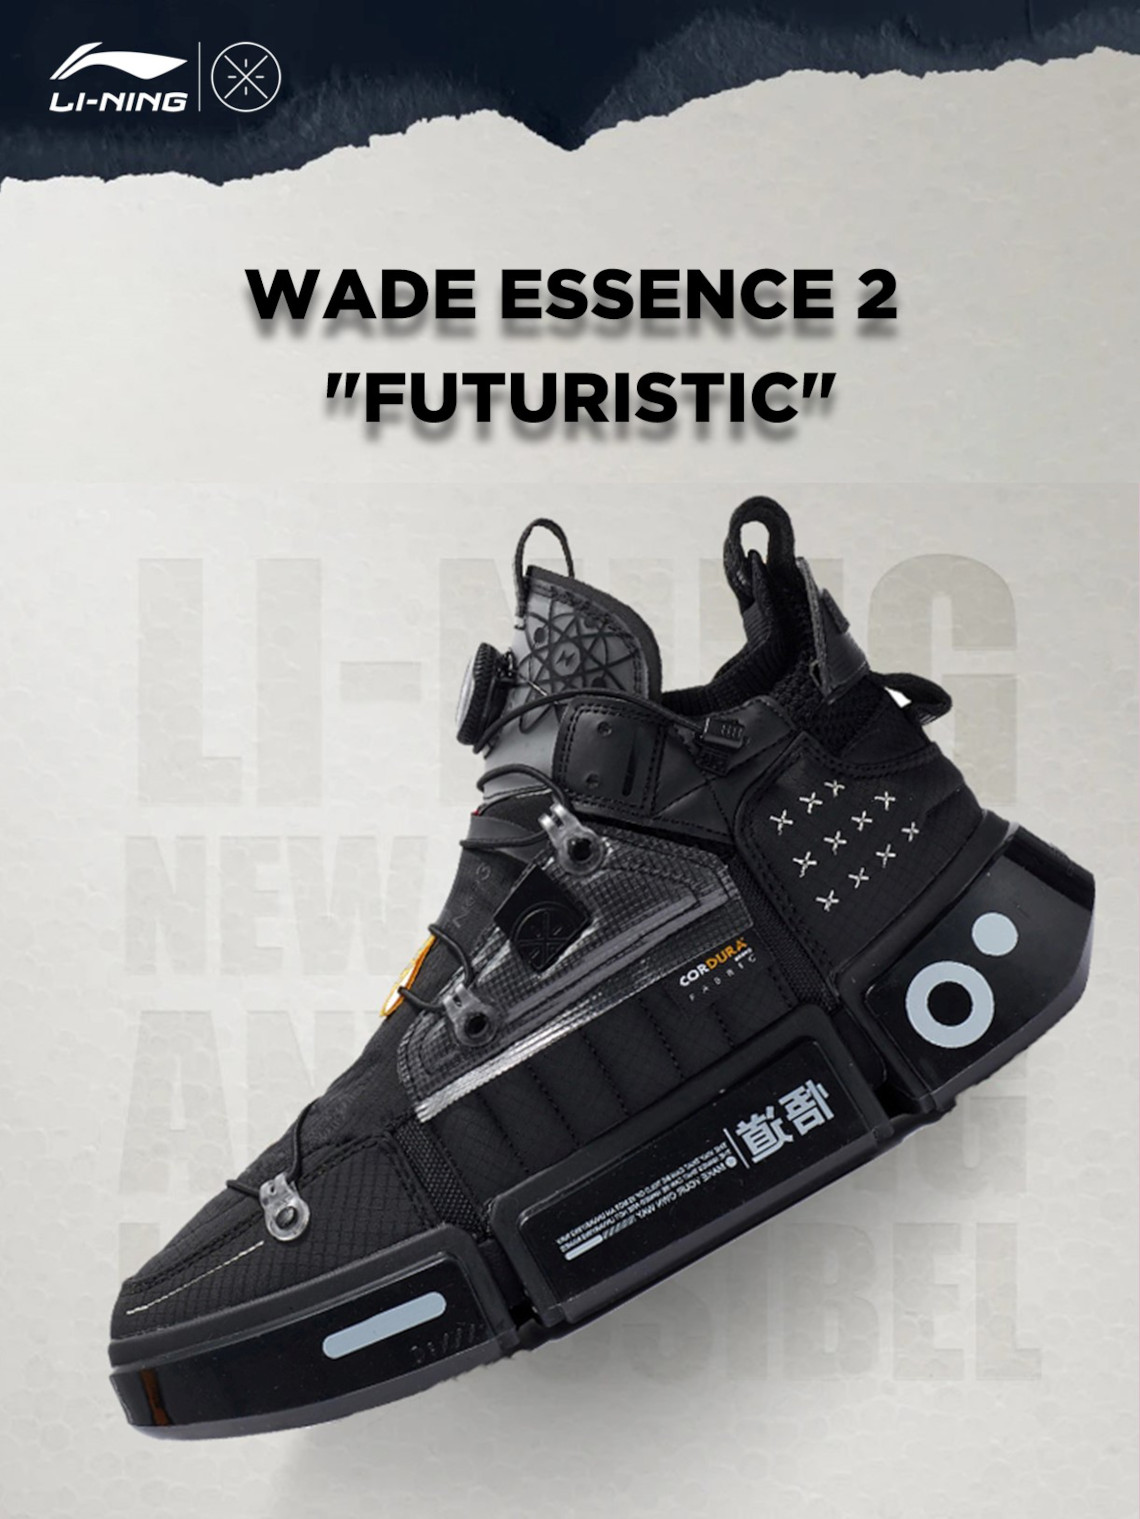 Li Ning Way Of Wade Essence 2 Futuristic 3